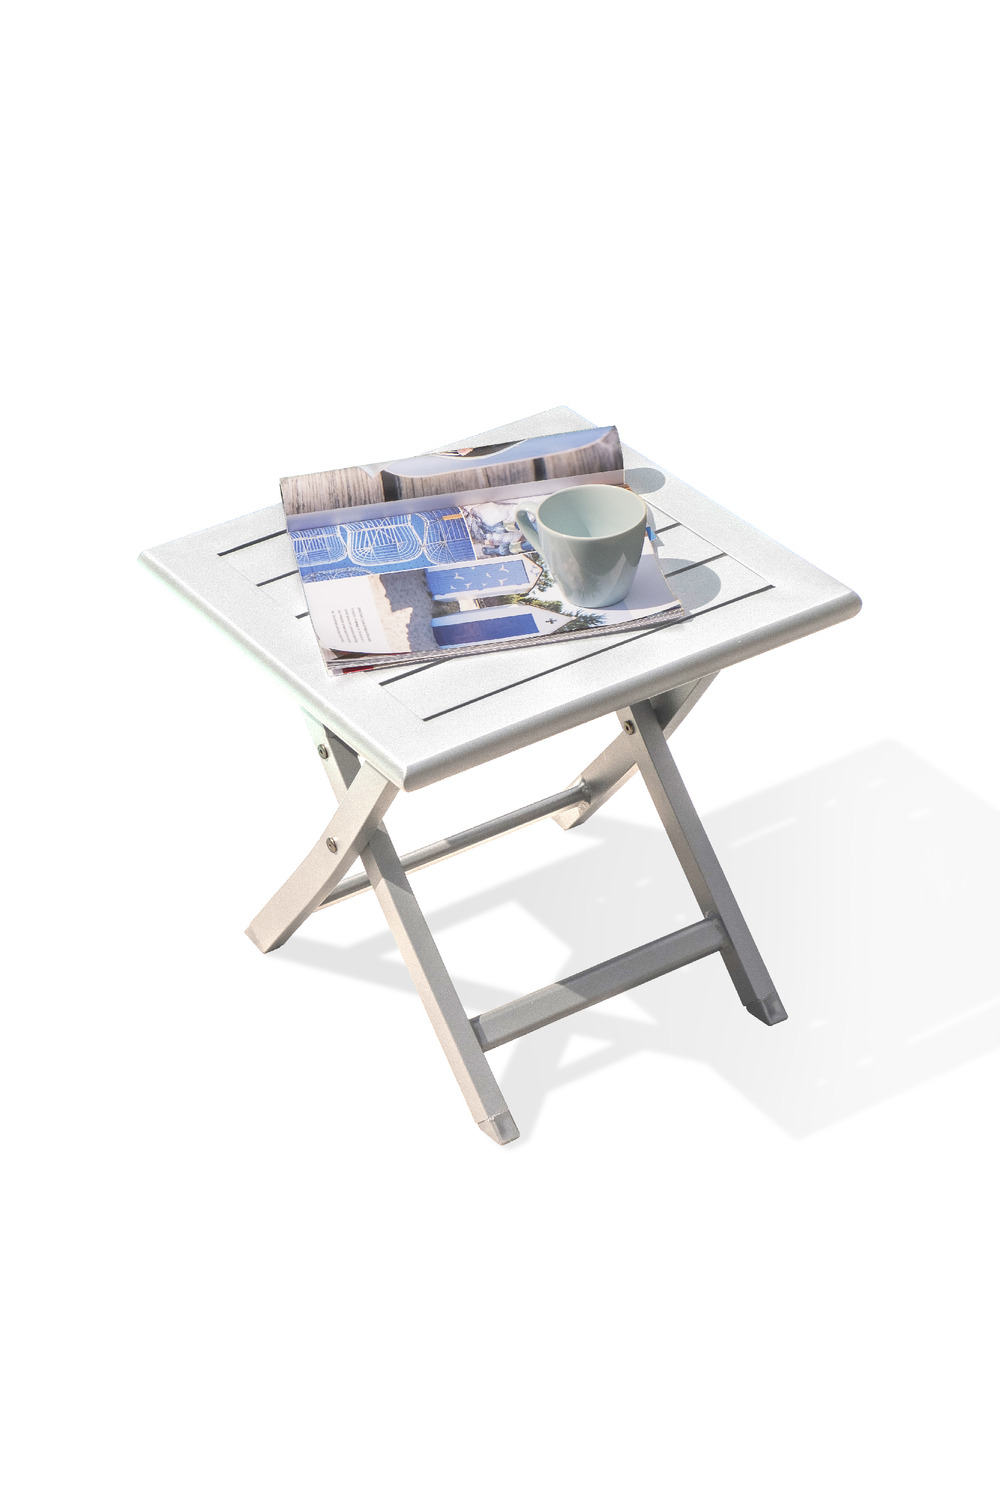 Marius - table basse de jardin pliante en aluminium blanc